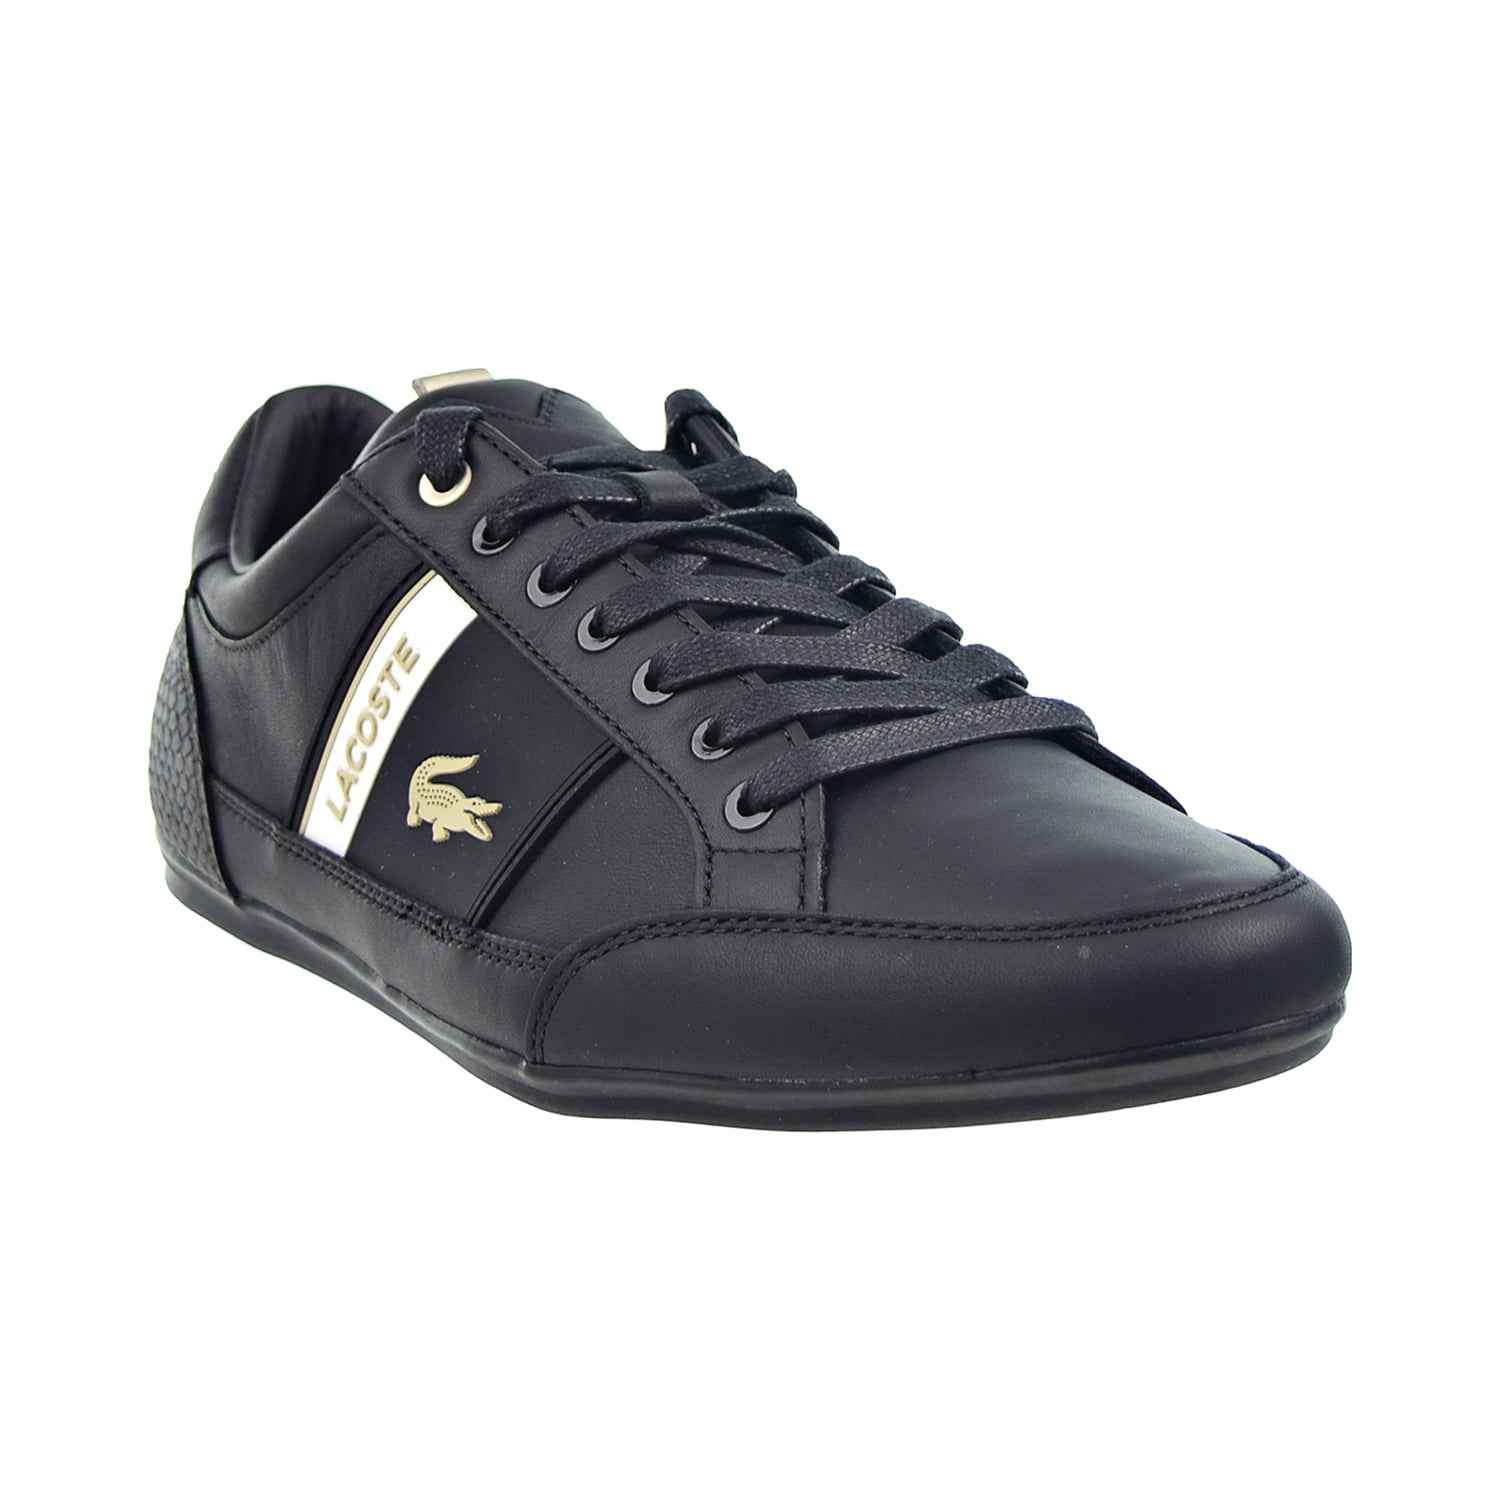 Lacoste Chaymon 321 1 CMA Men's Shoes 7-42cma0010-02h - Walmart.com